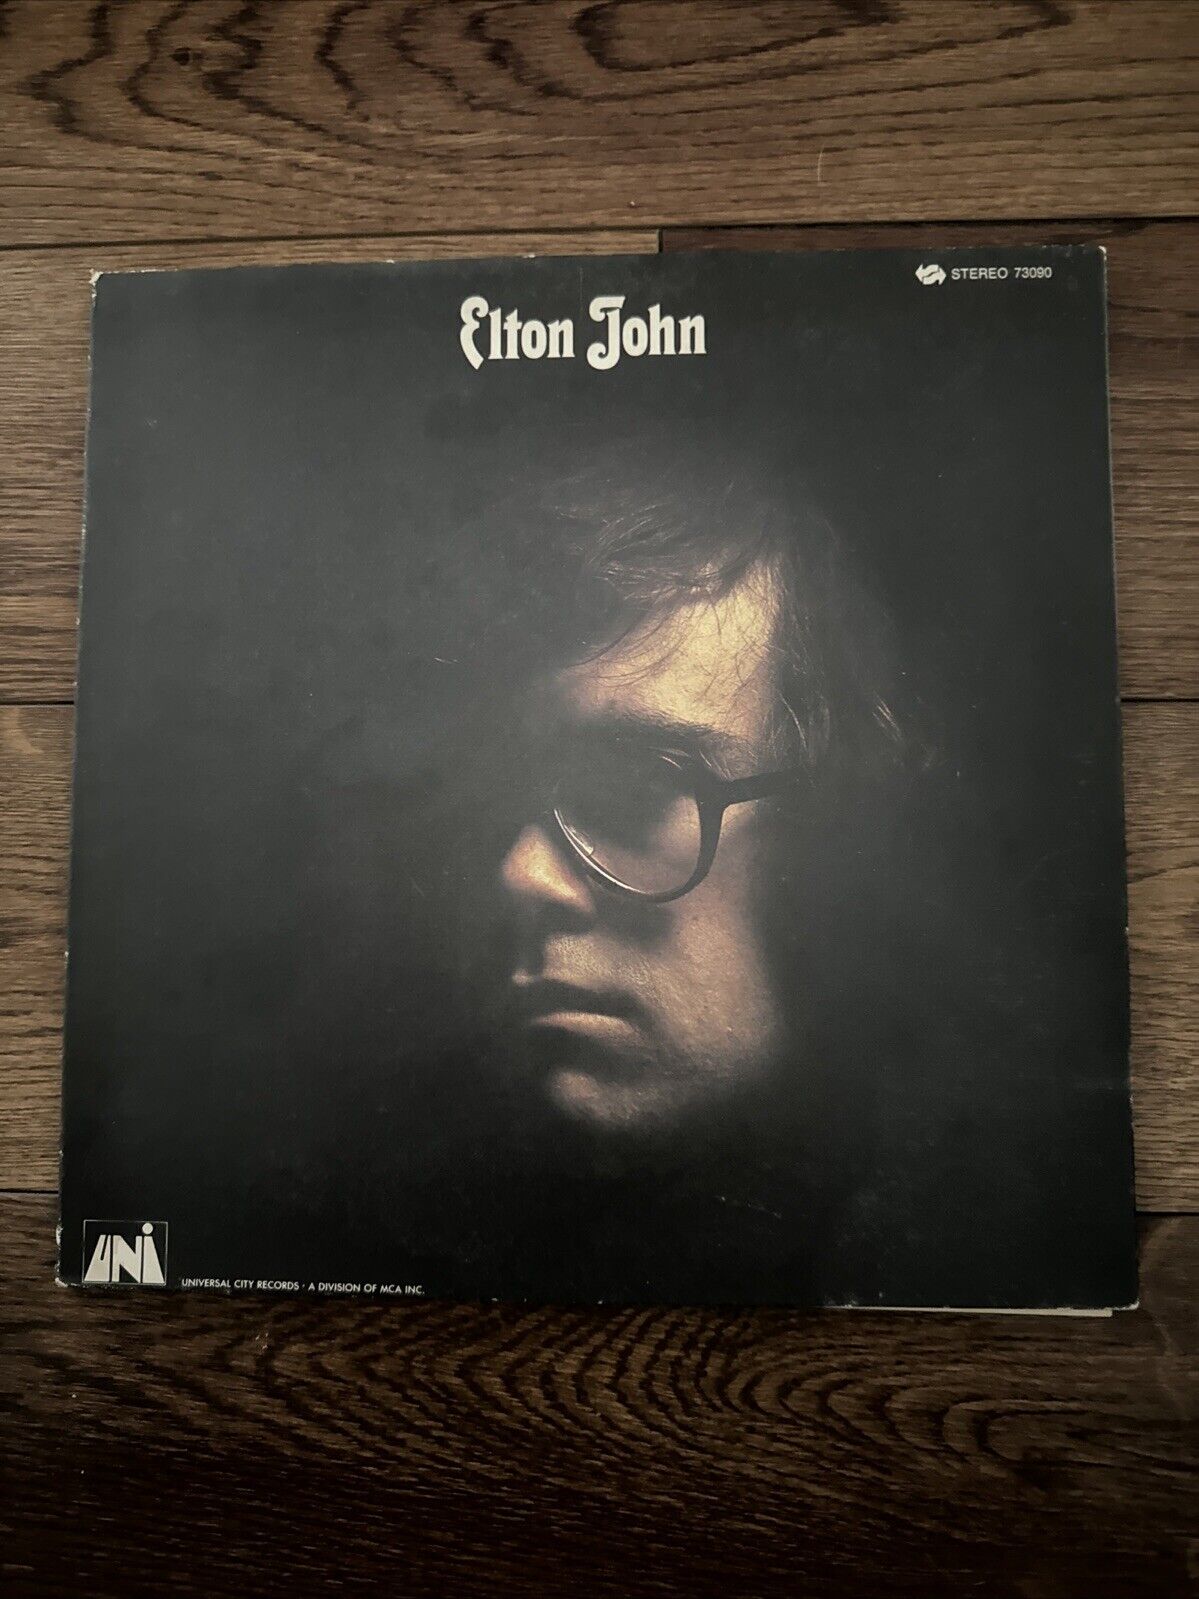 Elton John Self Titled Vinyl LP - 1970 First Press - UNI Records 73090